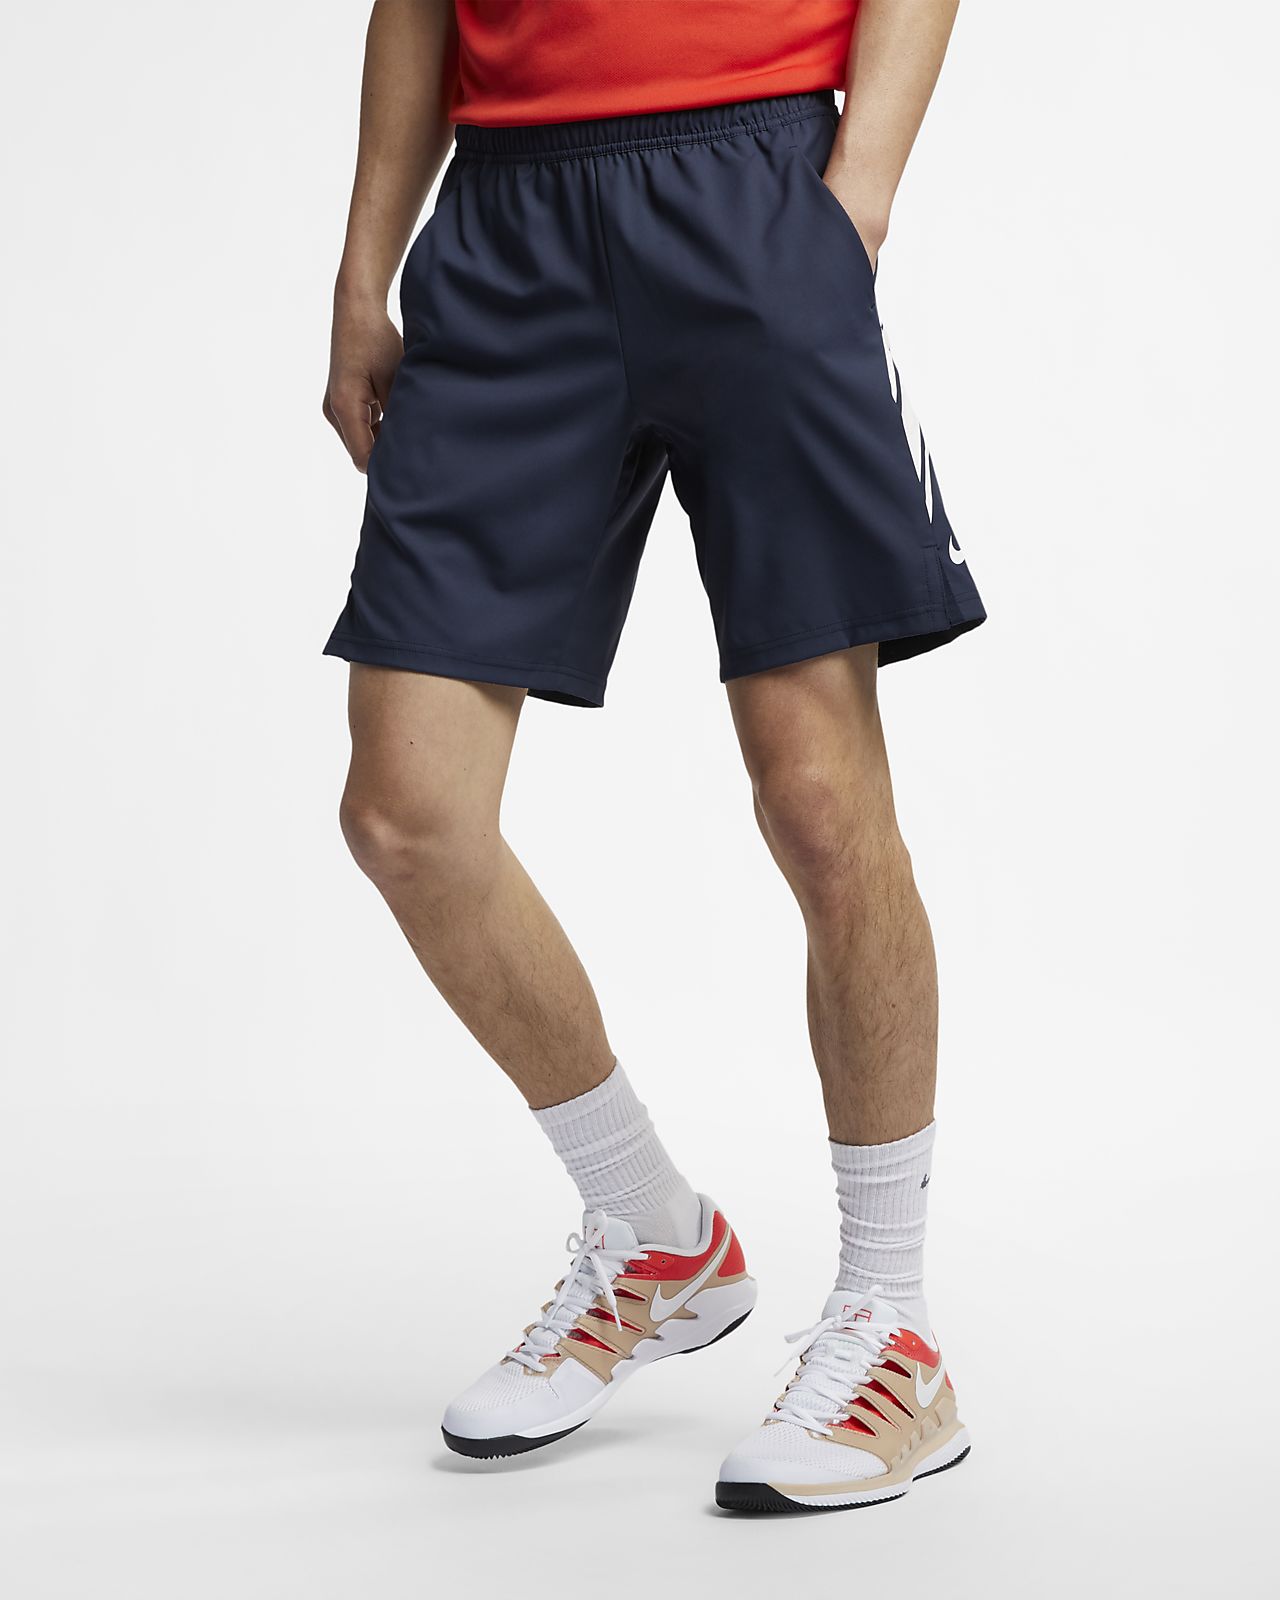 23cm approx.) Tennis Shorts. Nike SK